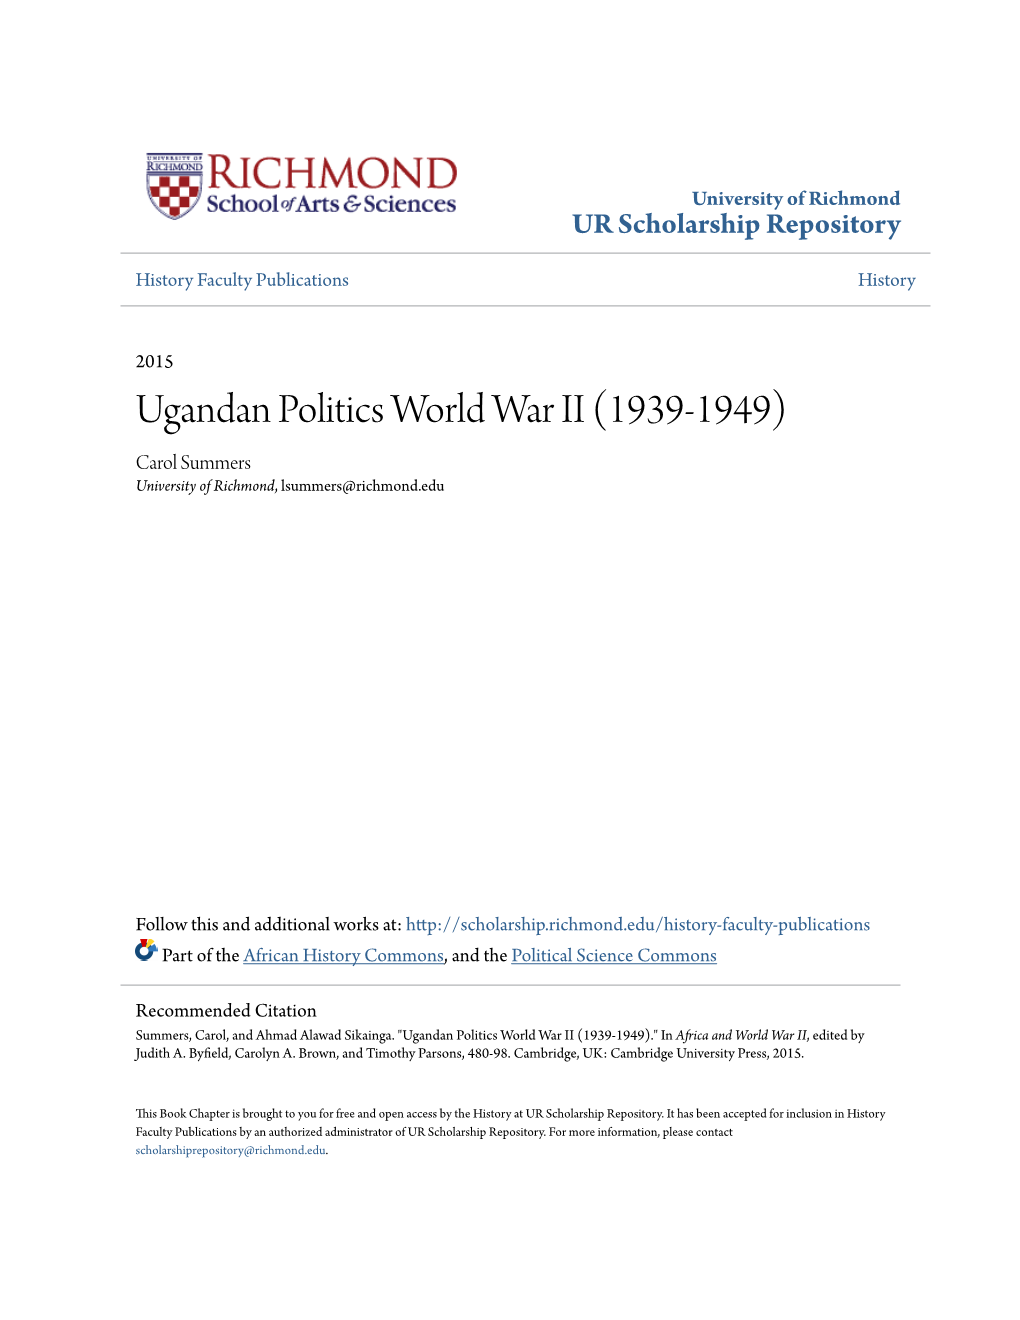 Ugandan Politics World War II (1939-1949) Carol Summers University of Richmond, Lsummers@Richmond.Edu